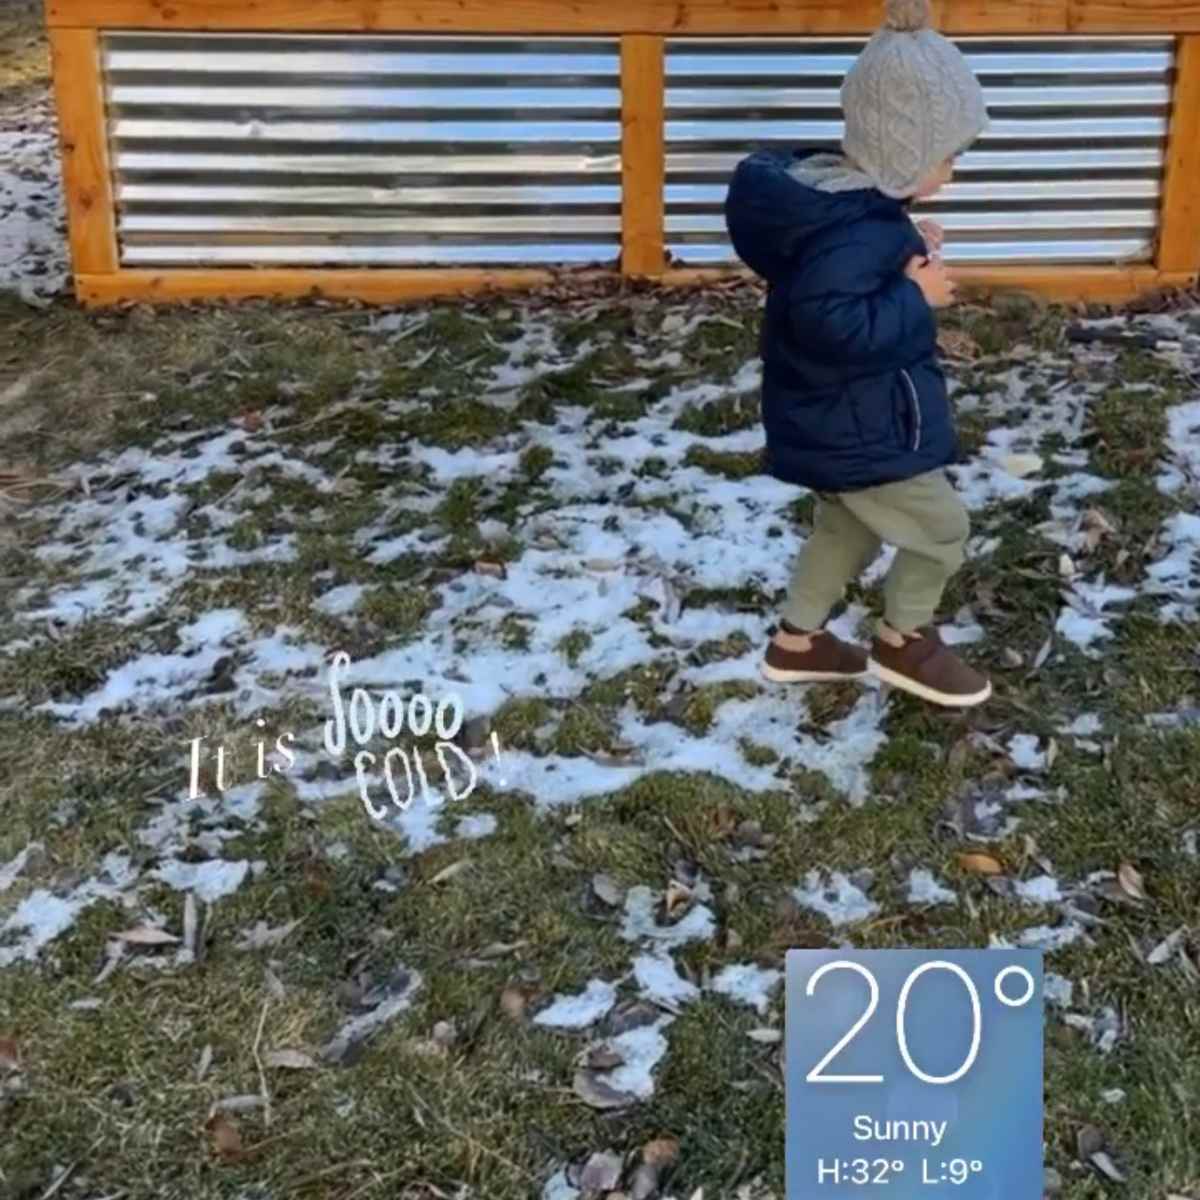 toddler spending time outside in winter